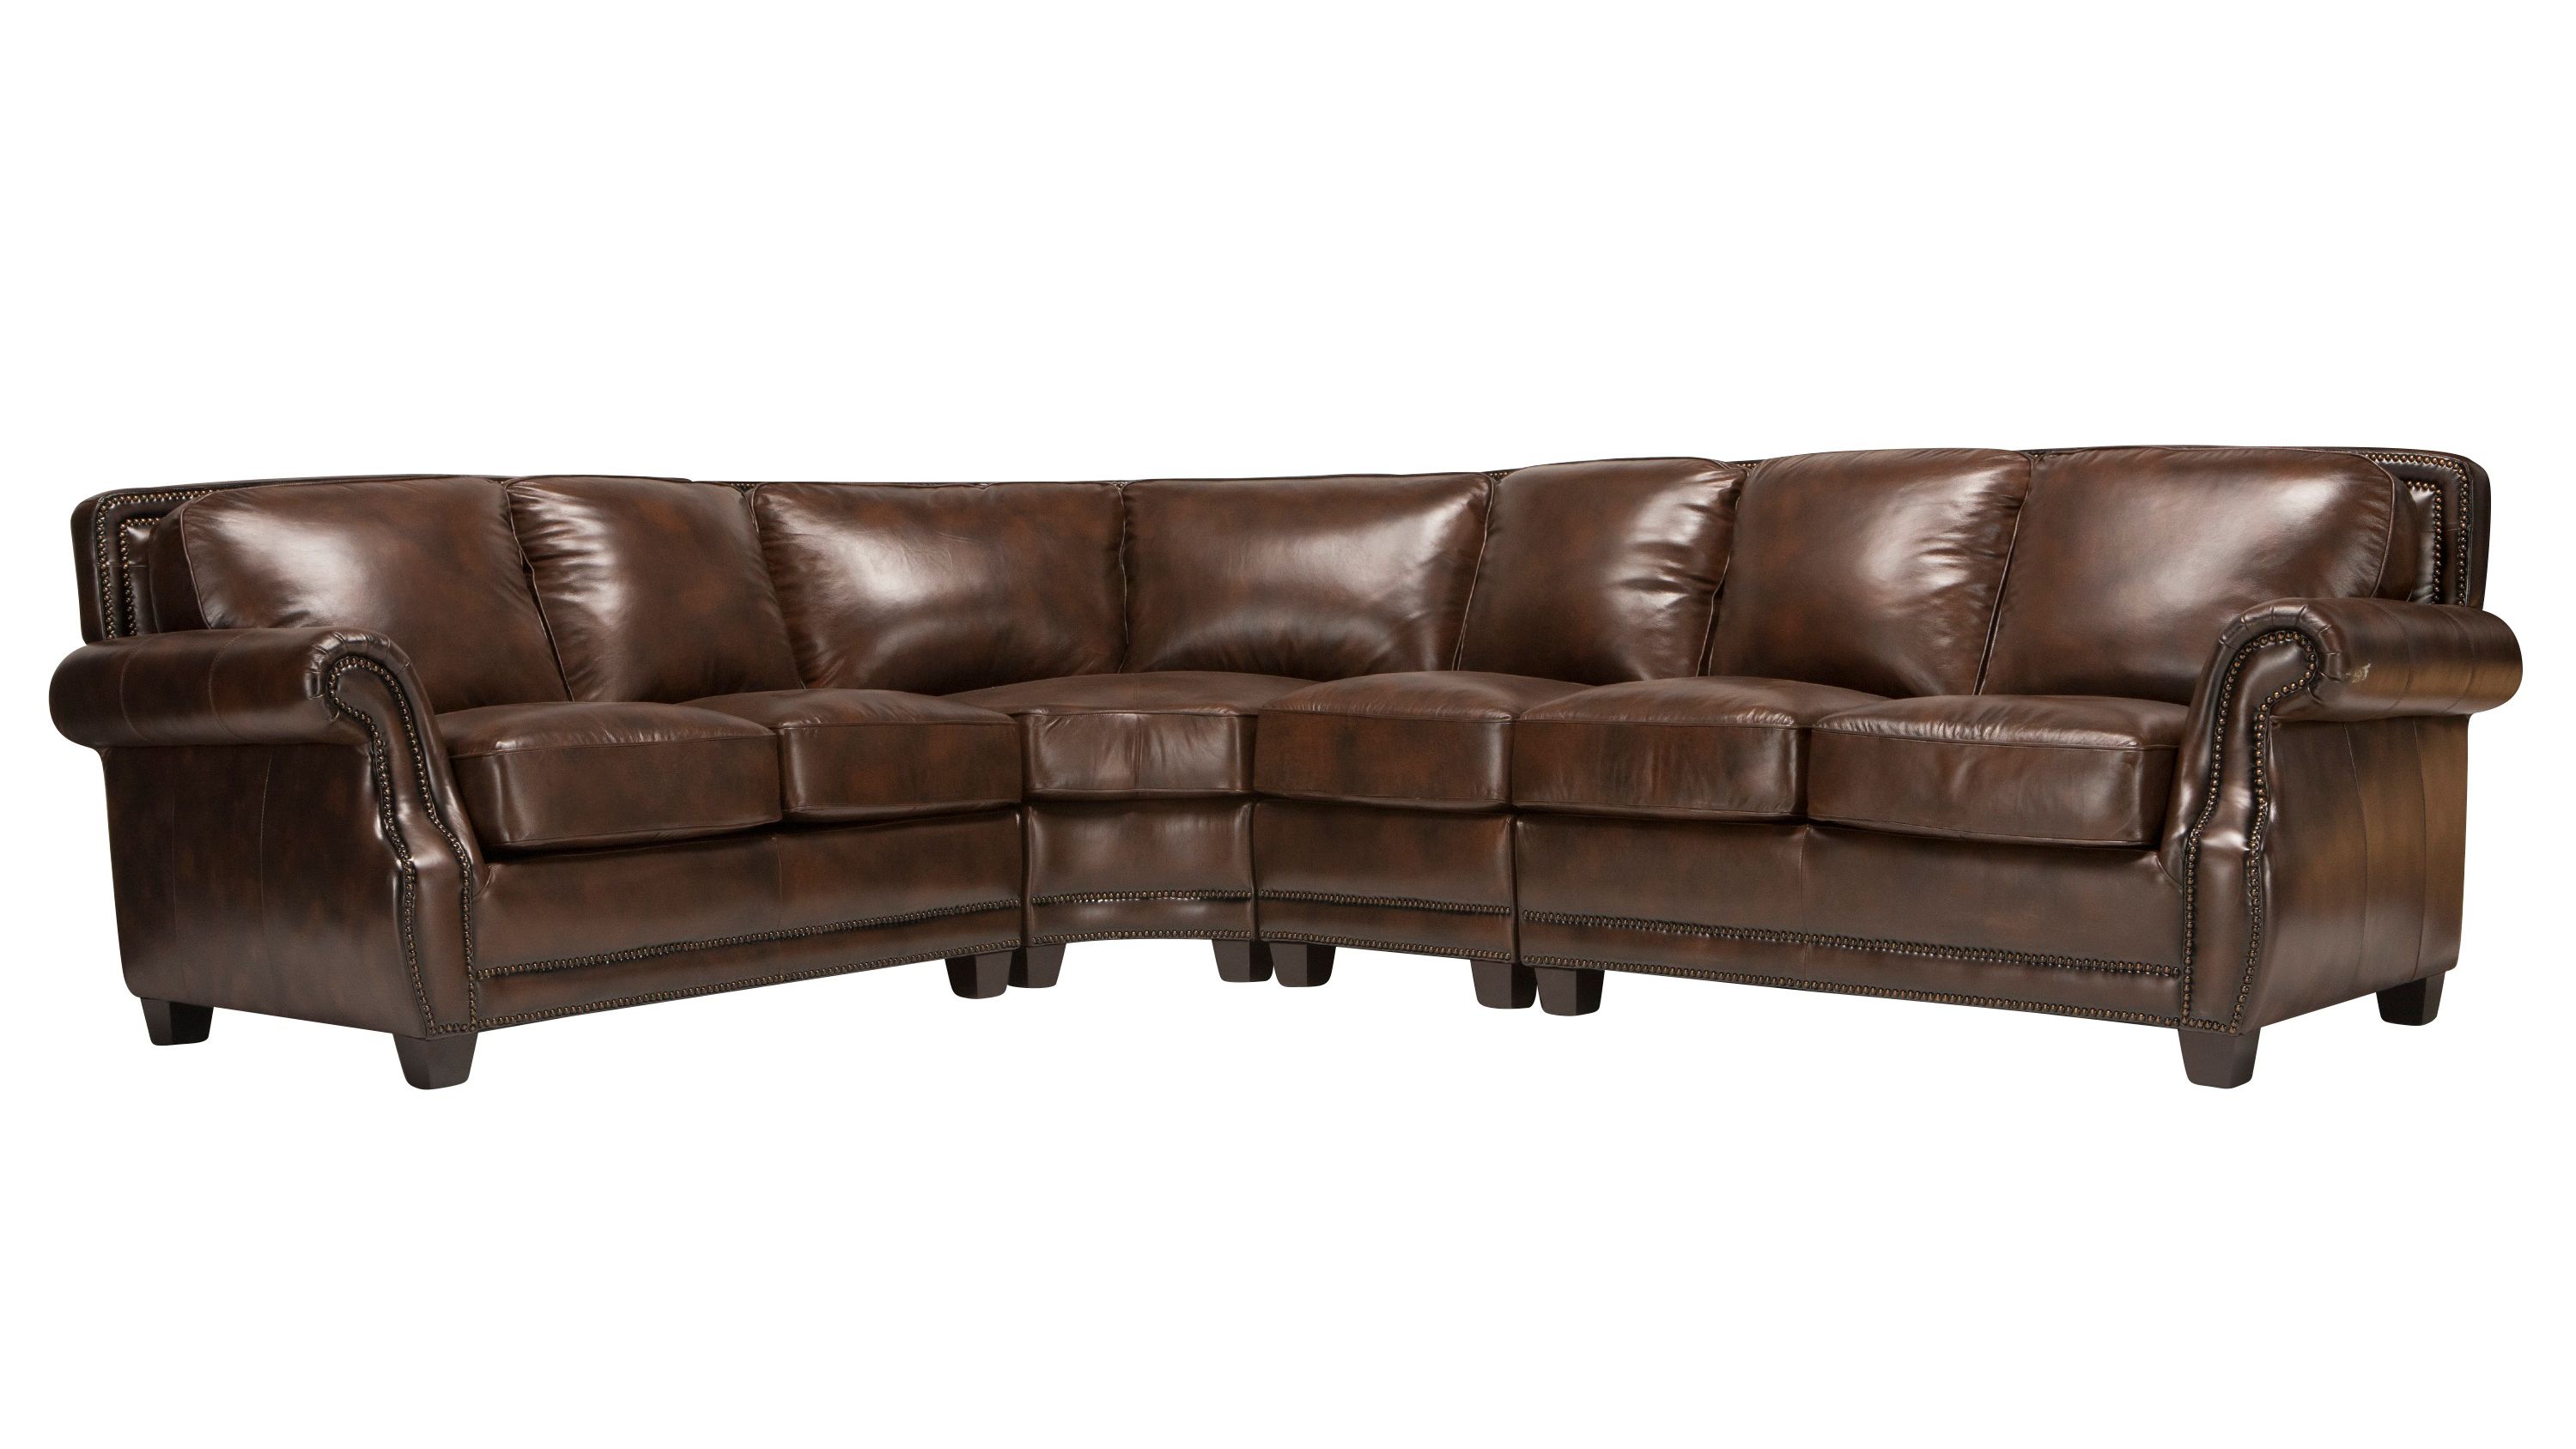 Romano 4-pc. Leather Sectional Sofa